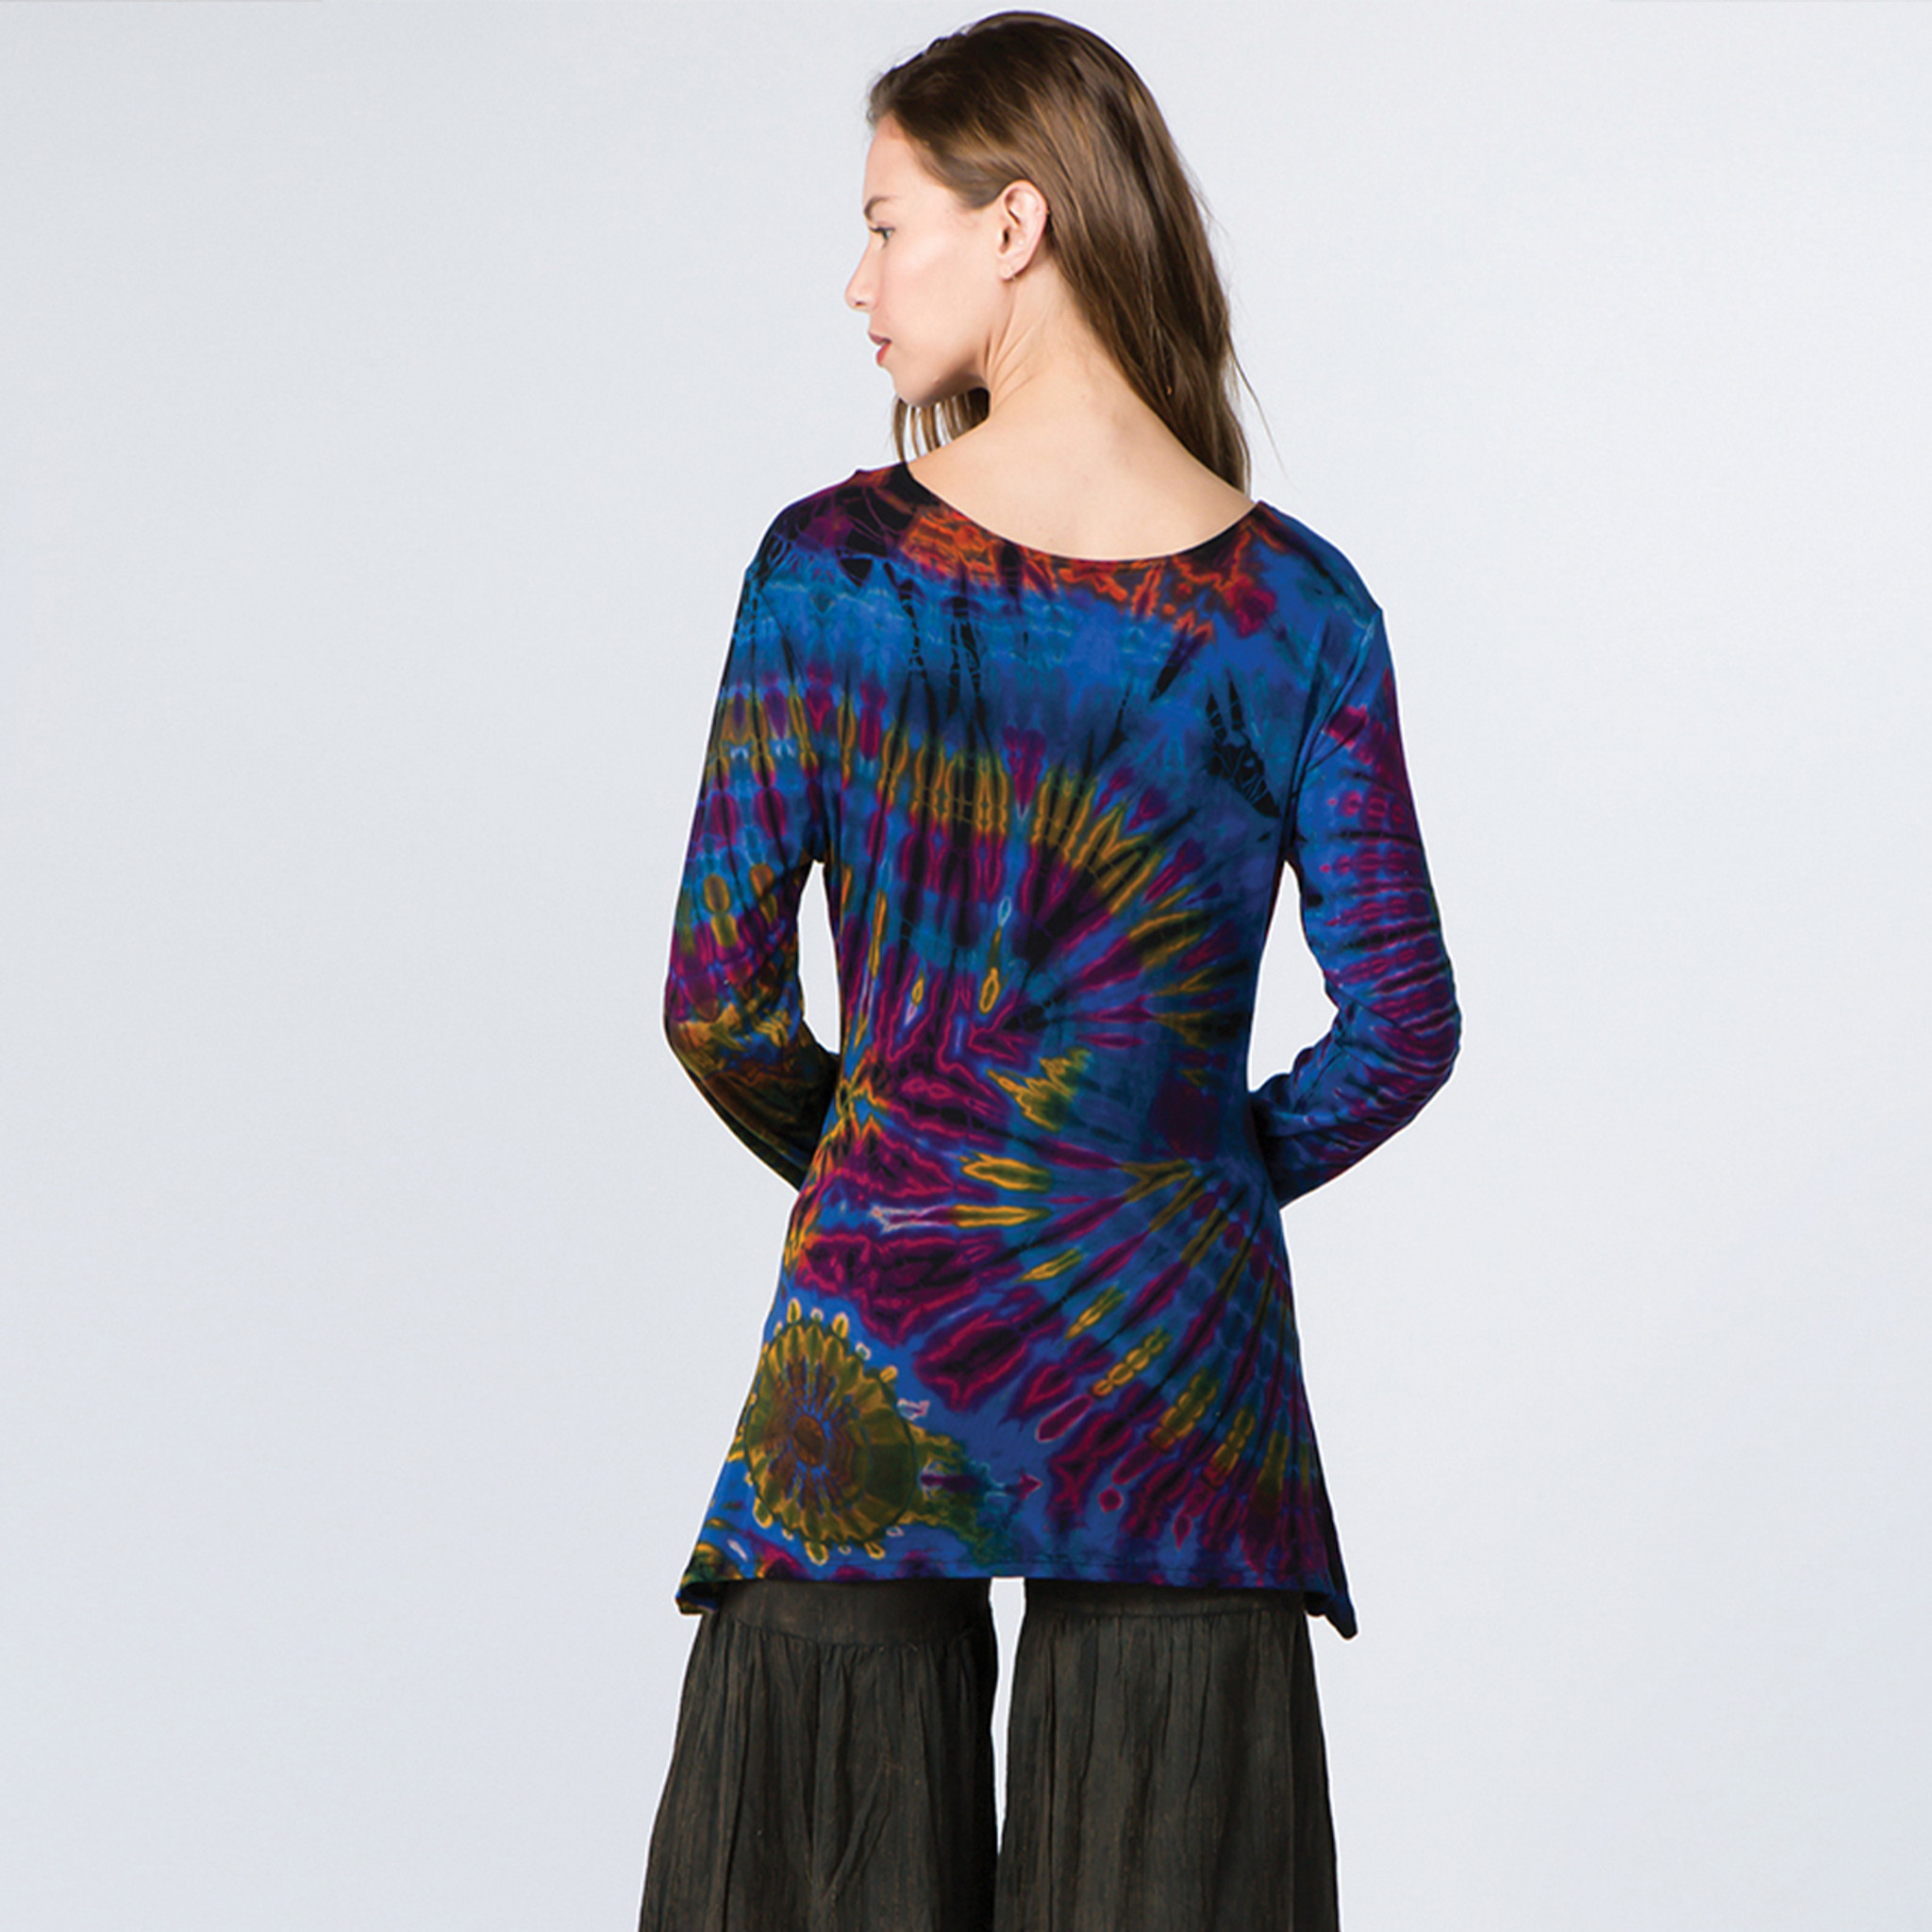 POGLIP Women's Rainbow Color Tie Dye Cut-out Long Sleeve Blouse